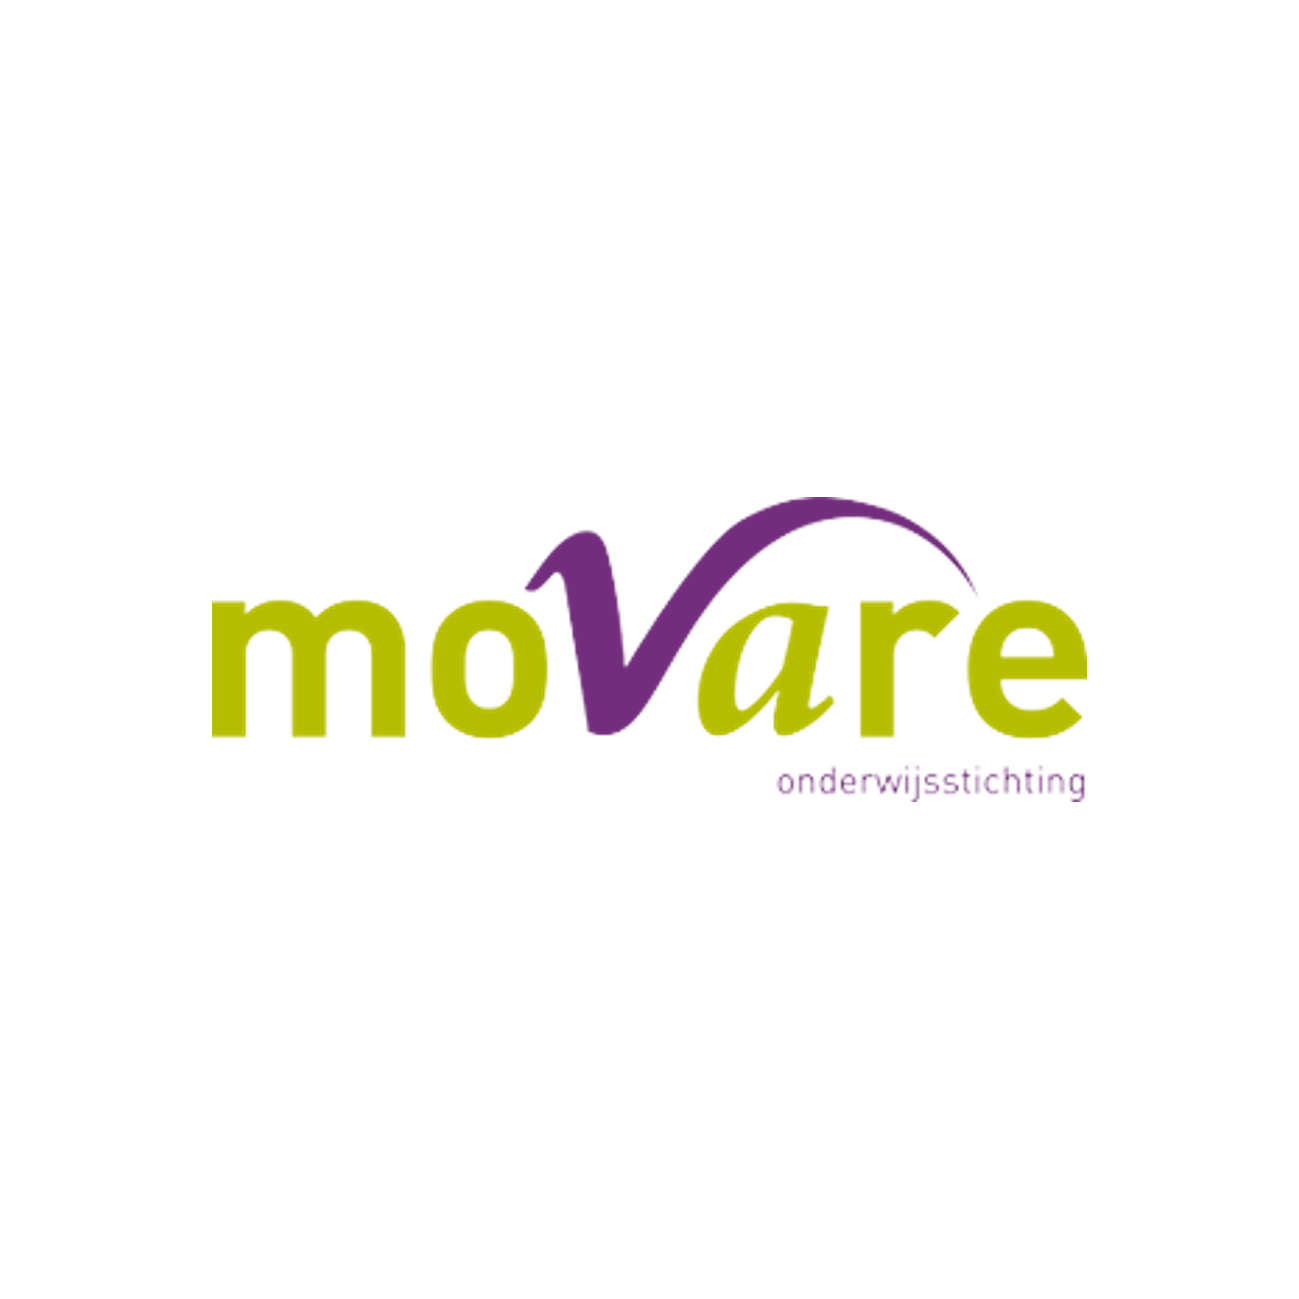 Movare